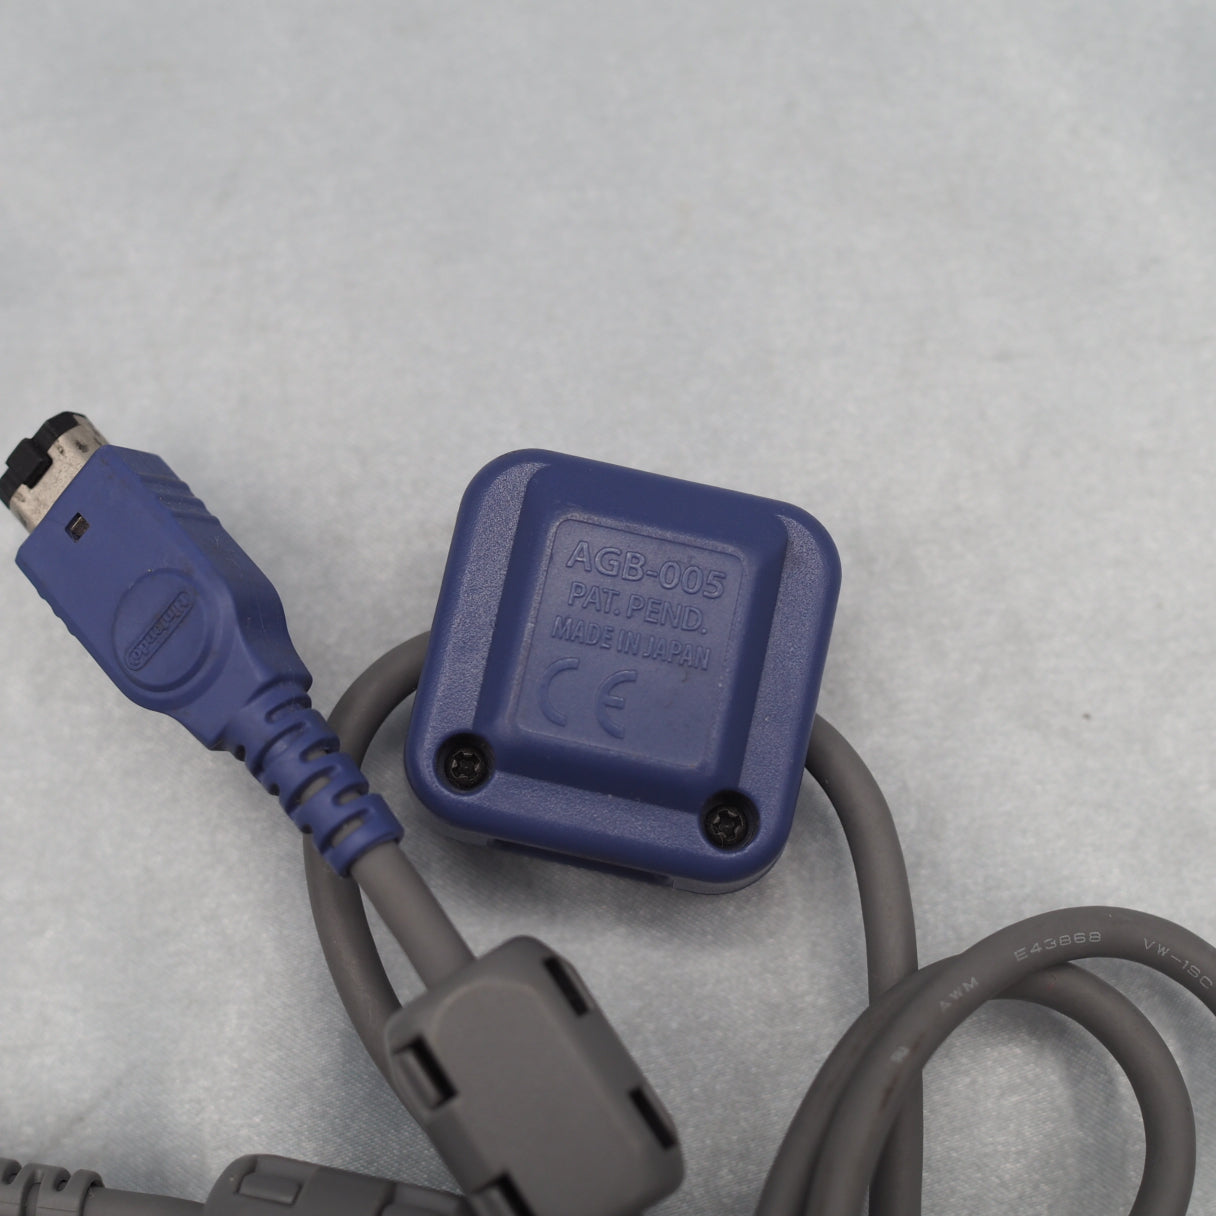 Nintendo Game Boy Advance TSUSHIN Connector Link Cable AGB-005